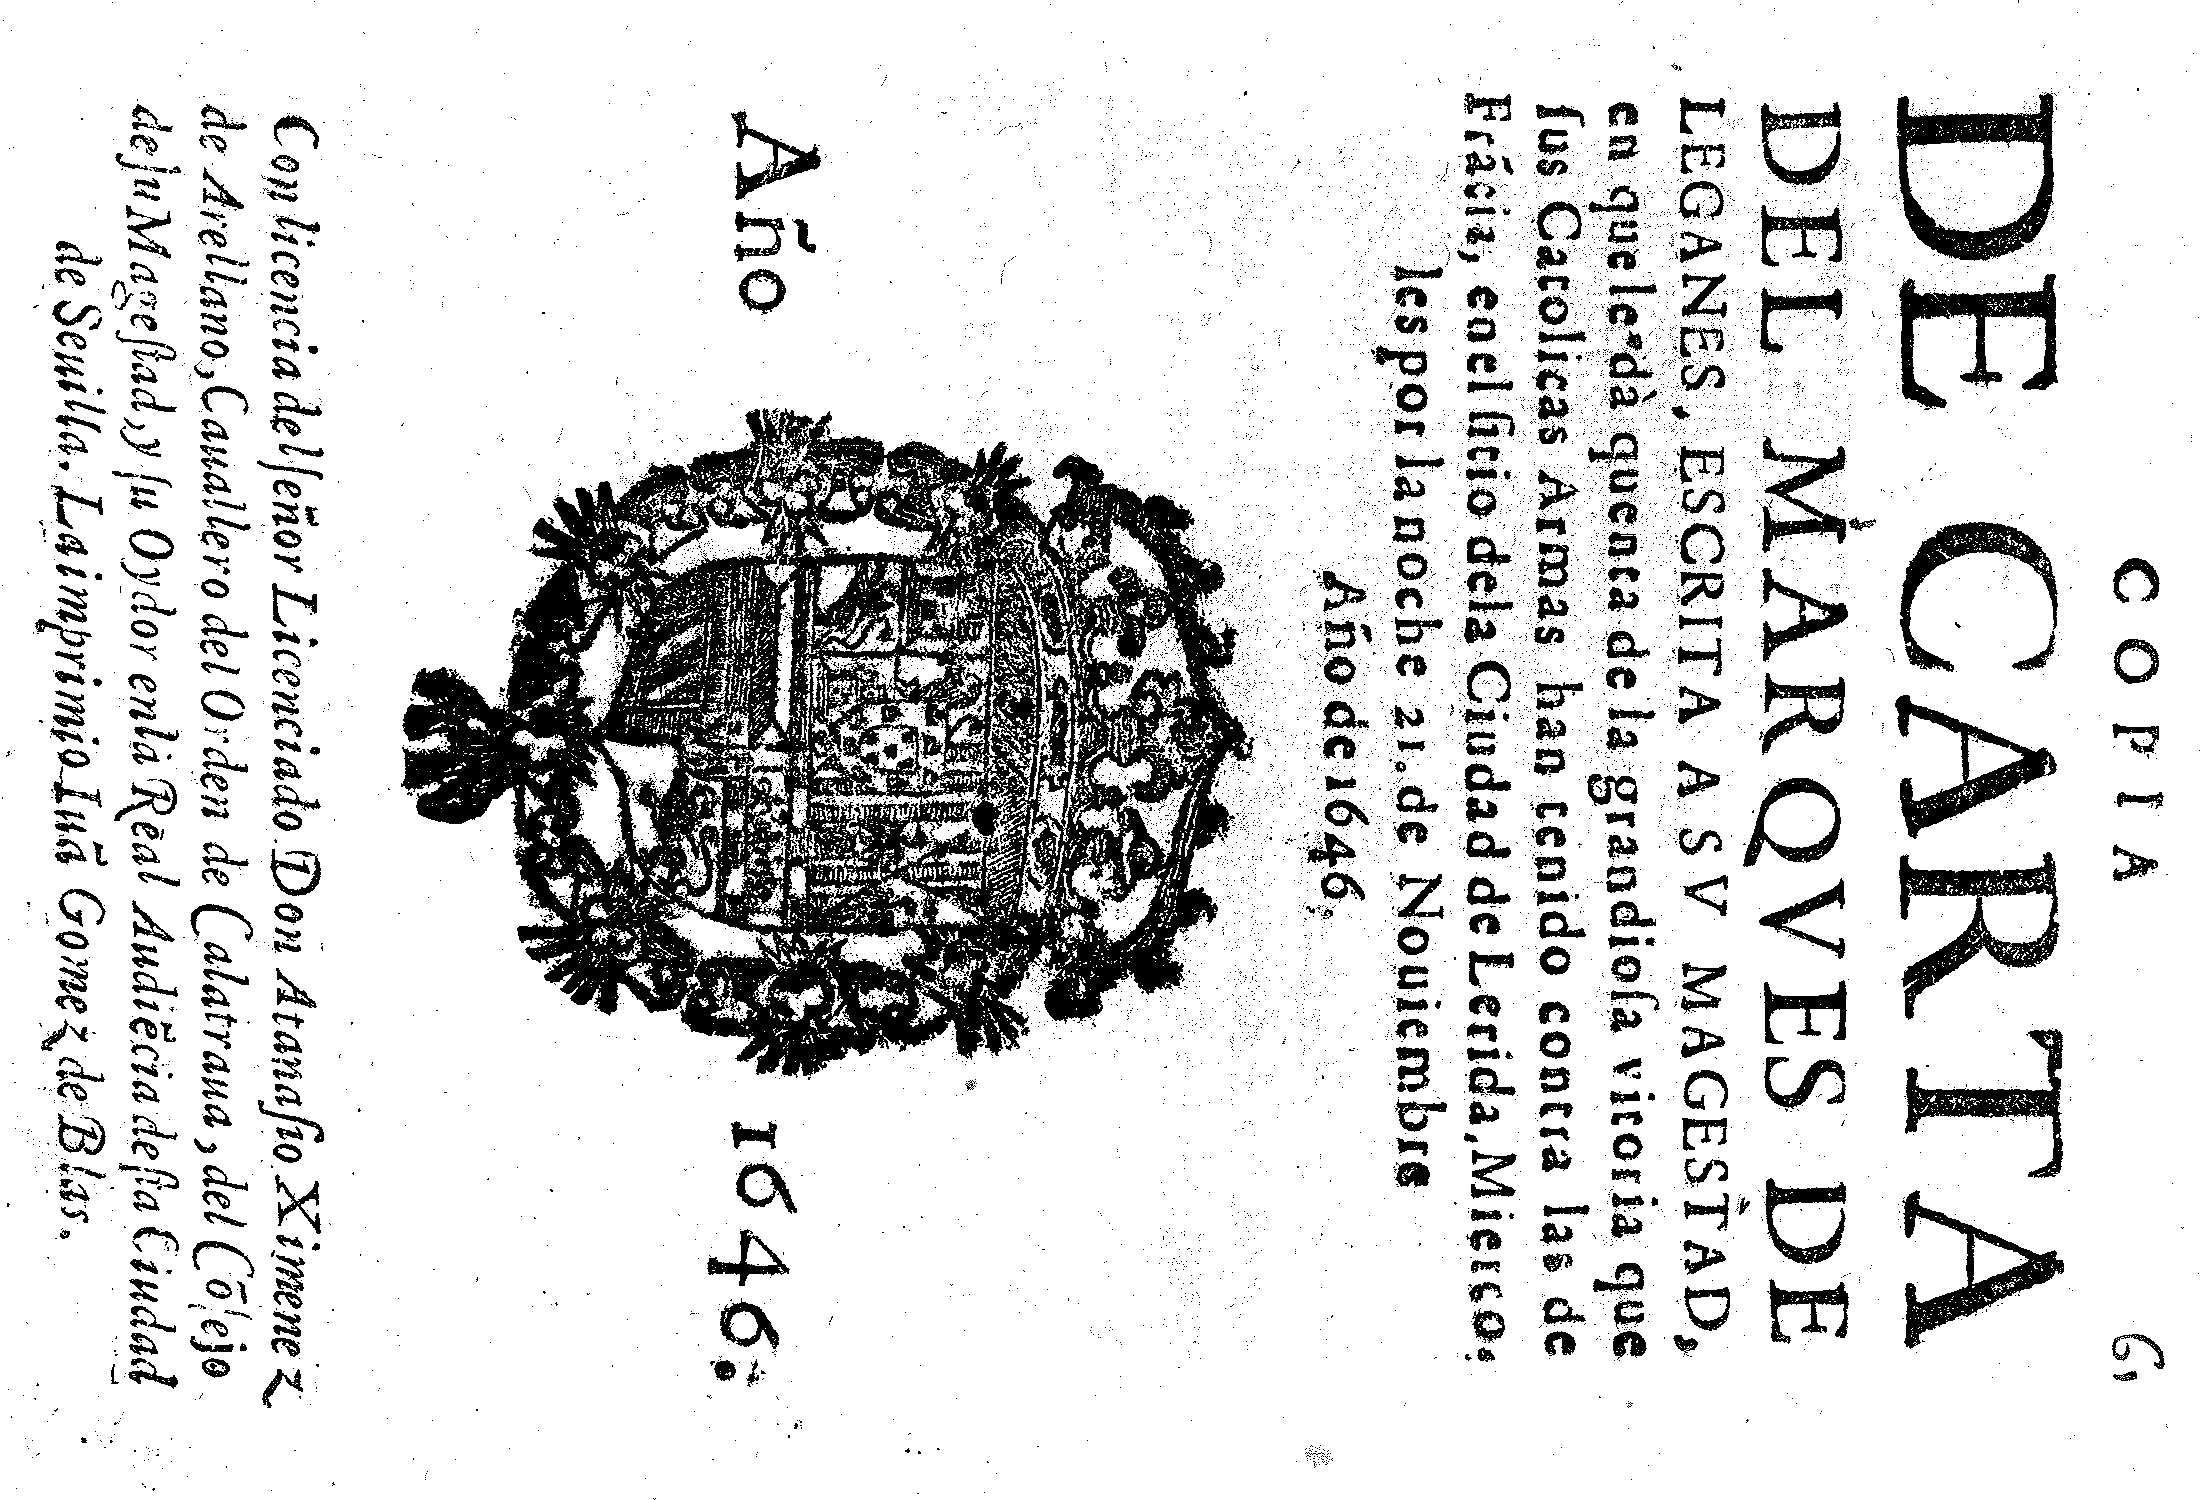 Copia de carta del Marques de Leganes, escrita a su magestad, ..